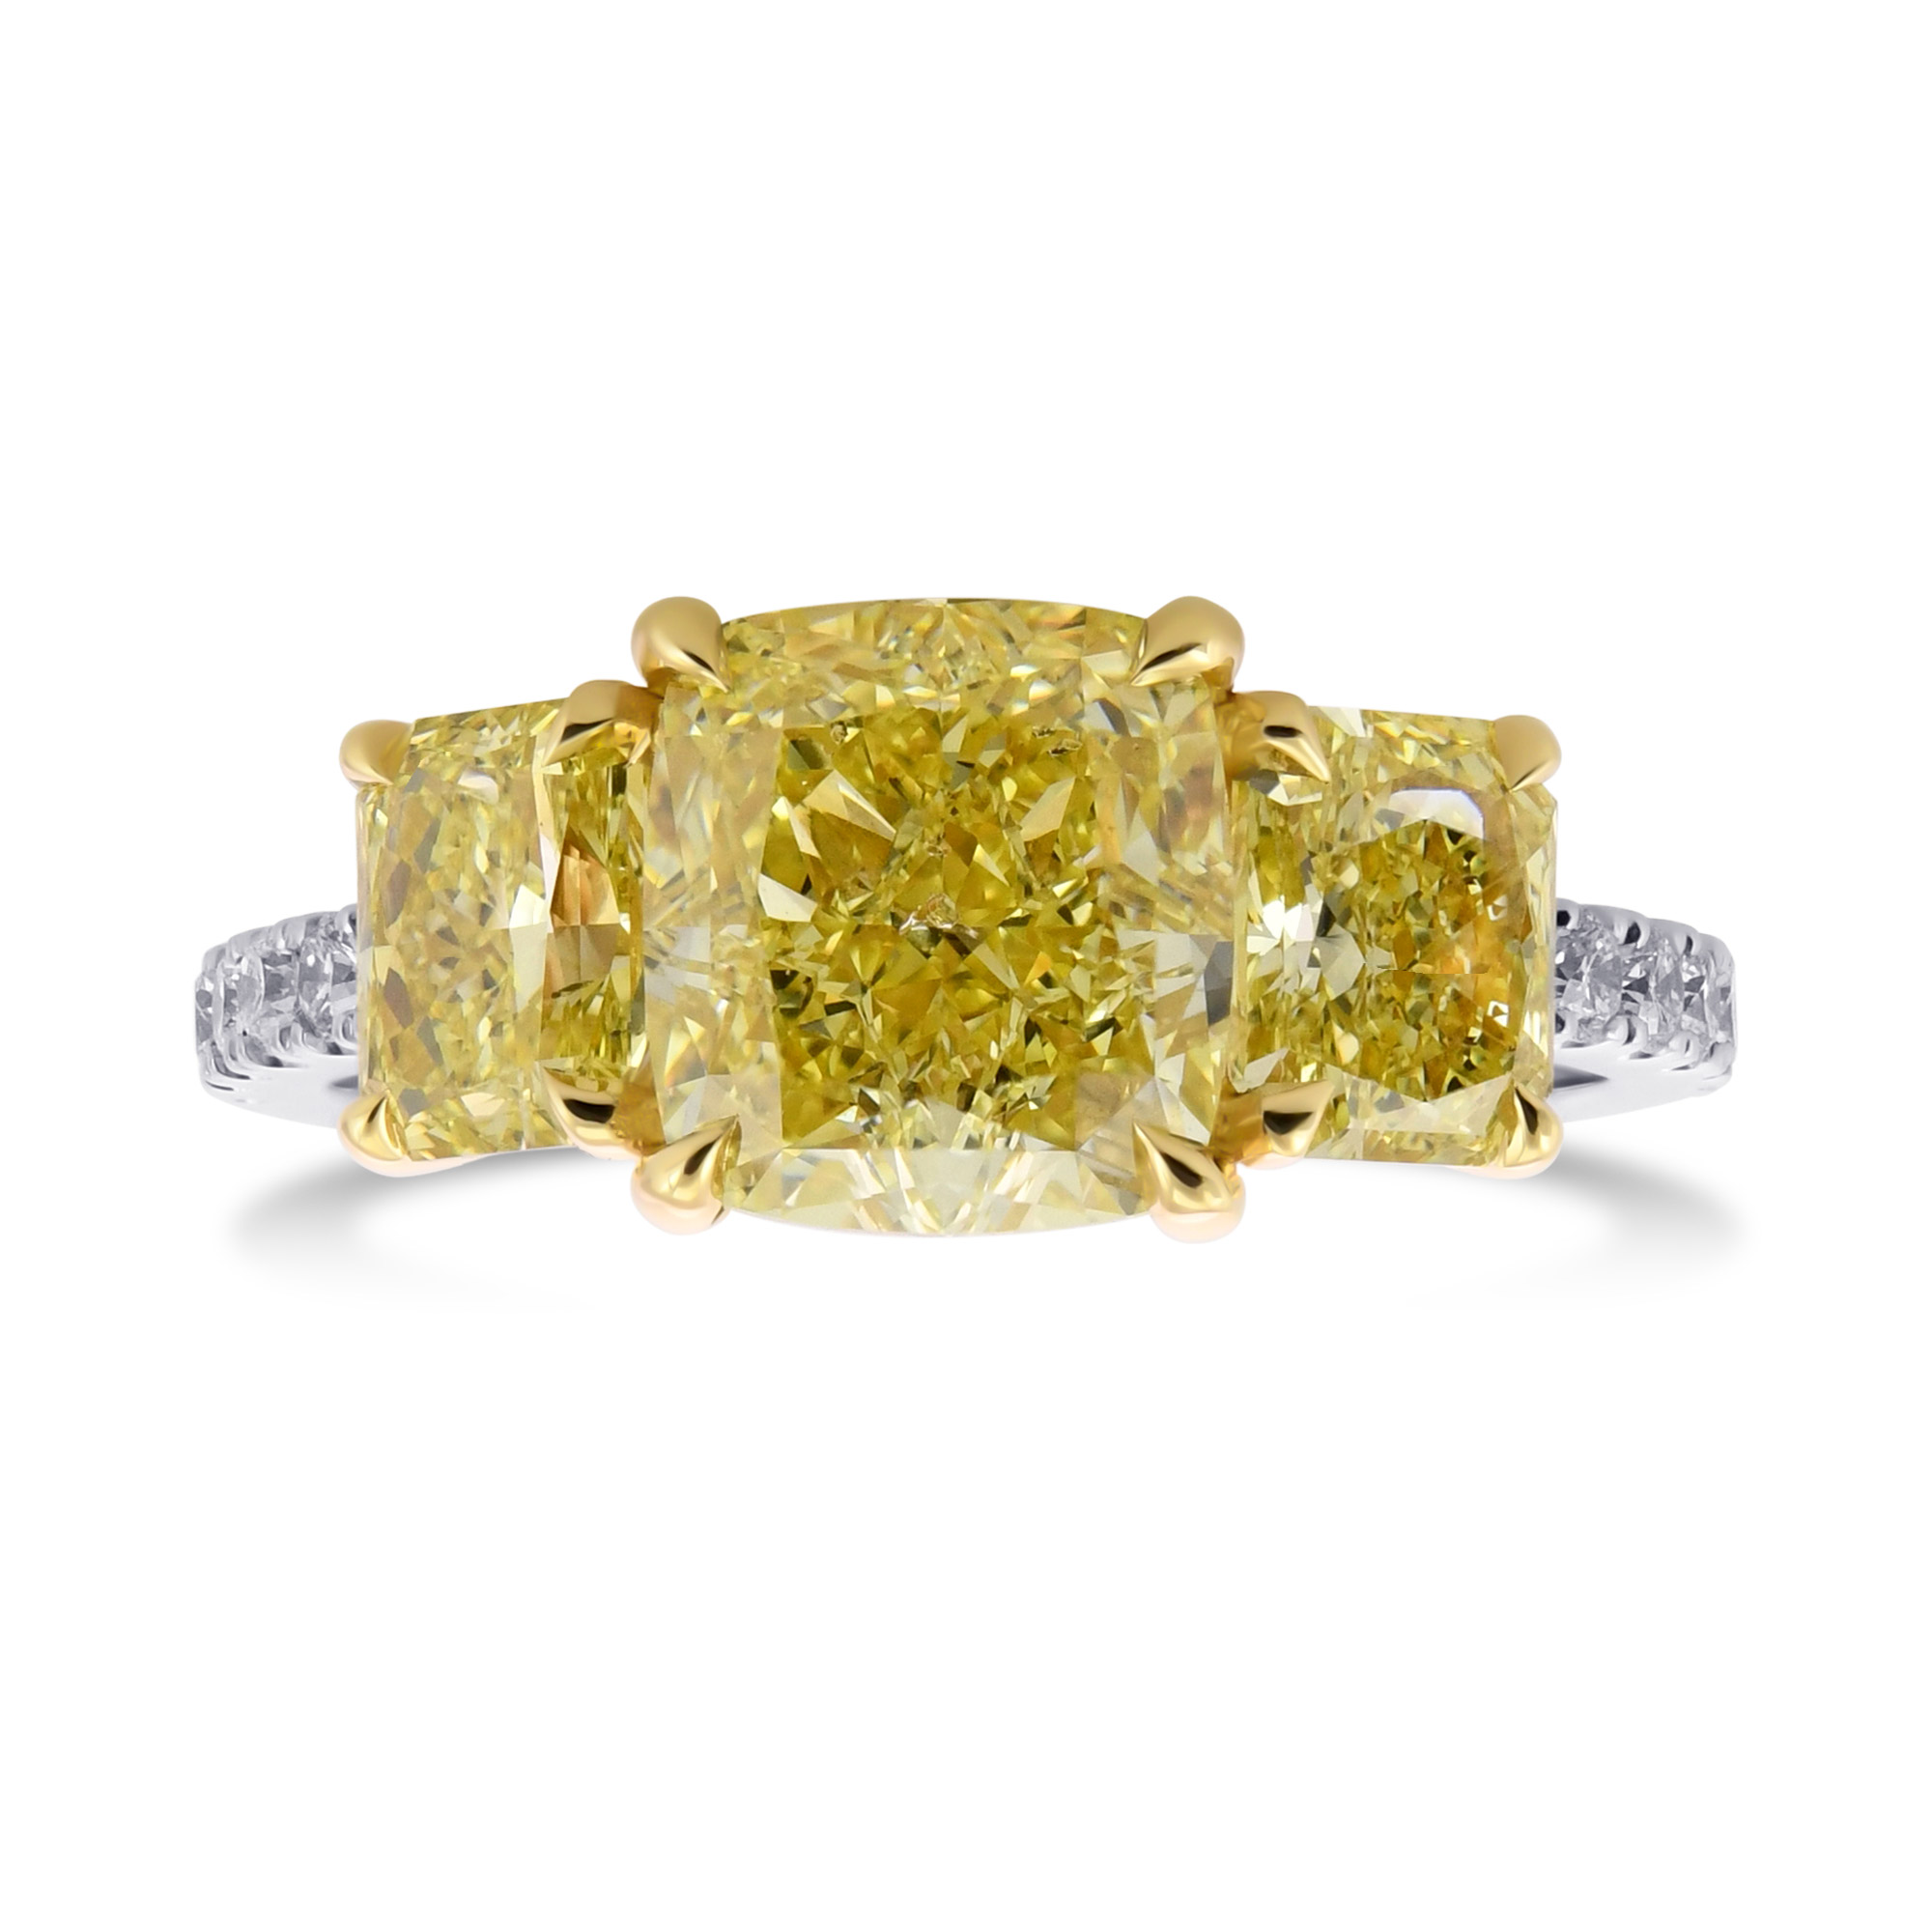 Fancy Intense Yellow Cushion Three-stone Diamond Ring, ARTIKELNUMMER 32174M (4,88 Karat TW)